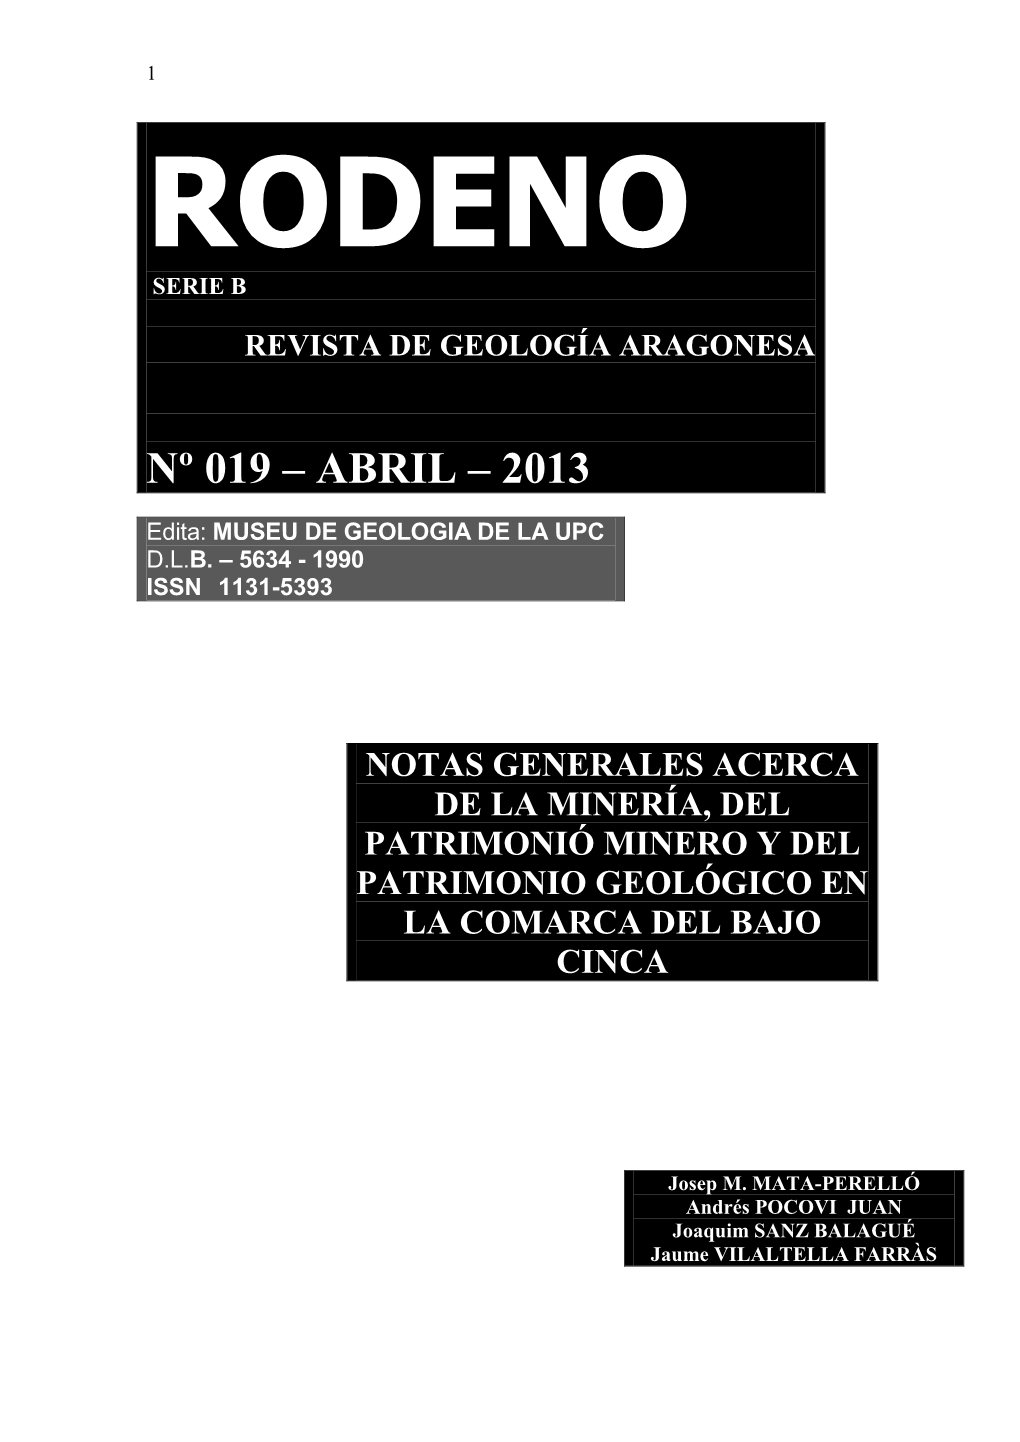 RODENO+019+ABRIL+2013.Pdf